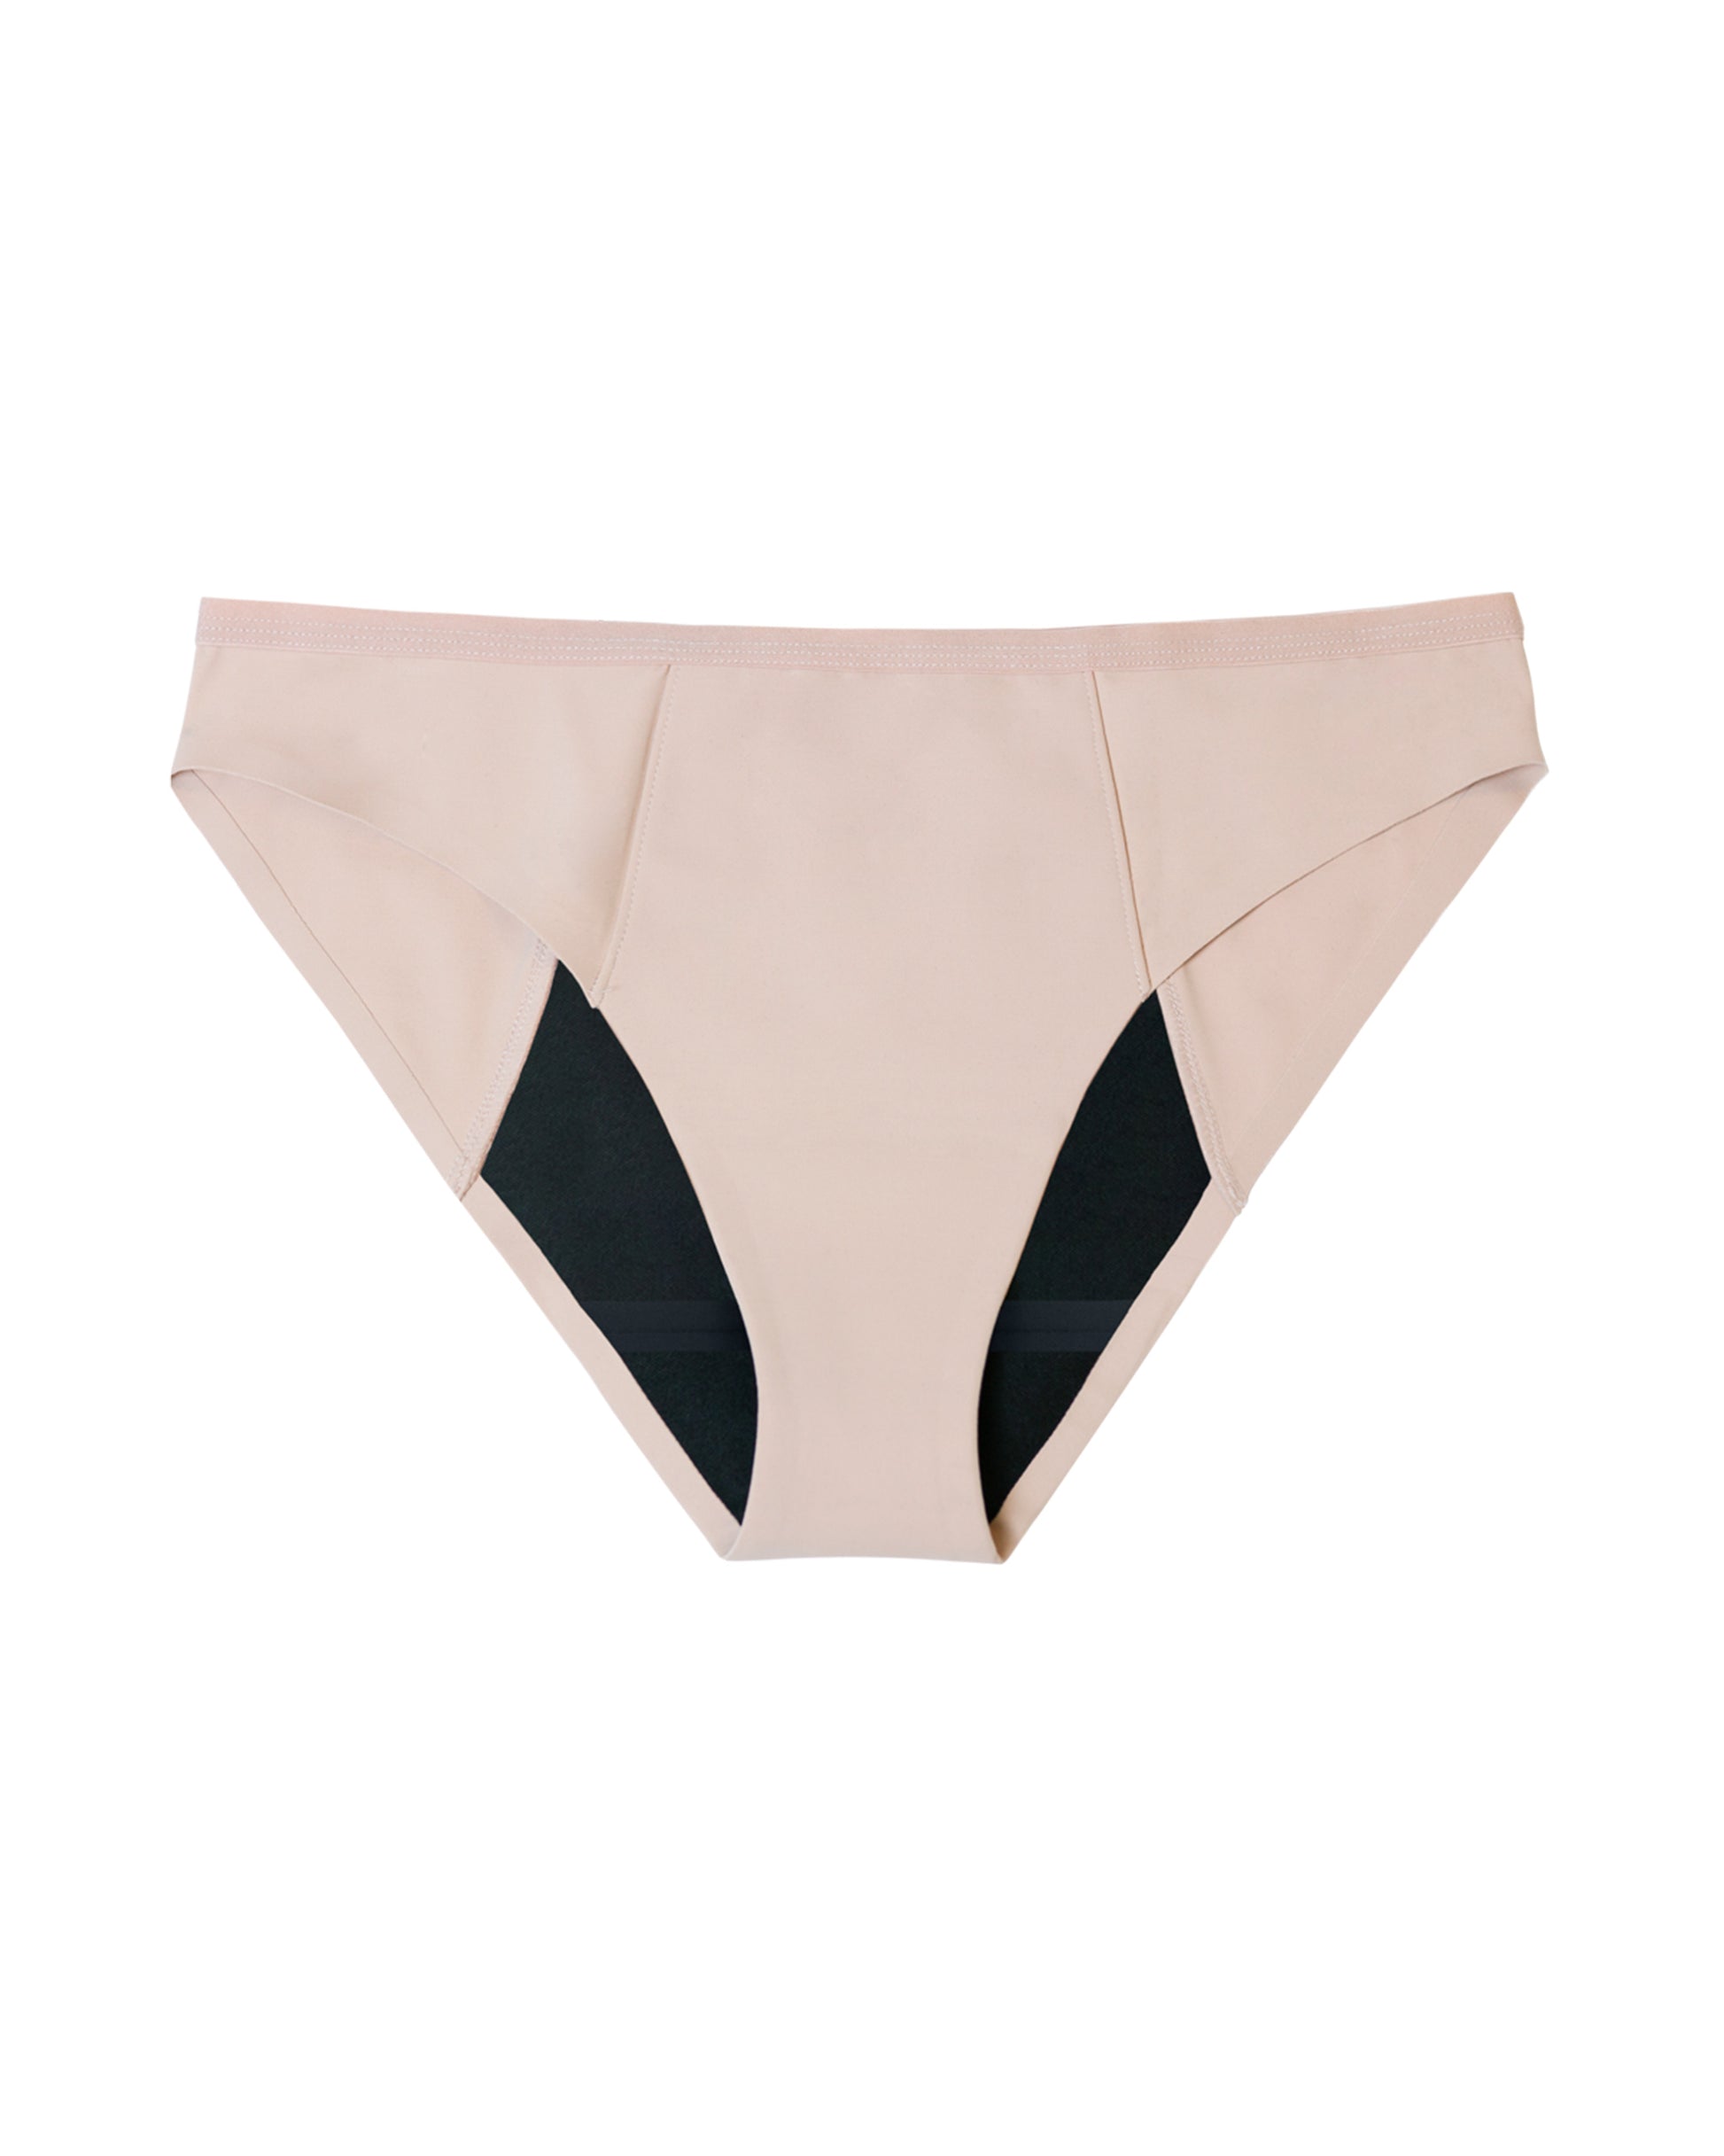 PEASKJP Womens Bikini Underwear Invisible Period Underwear for